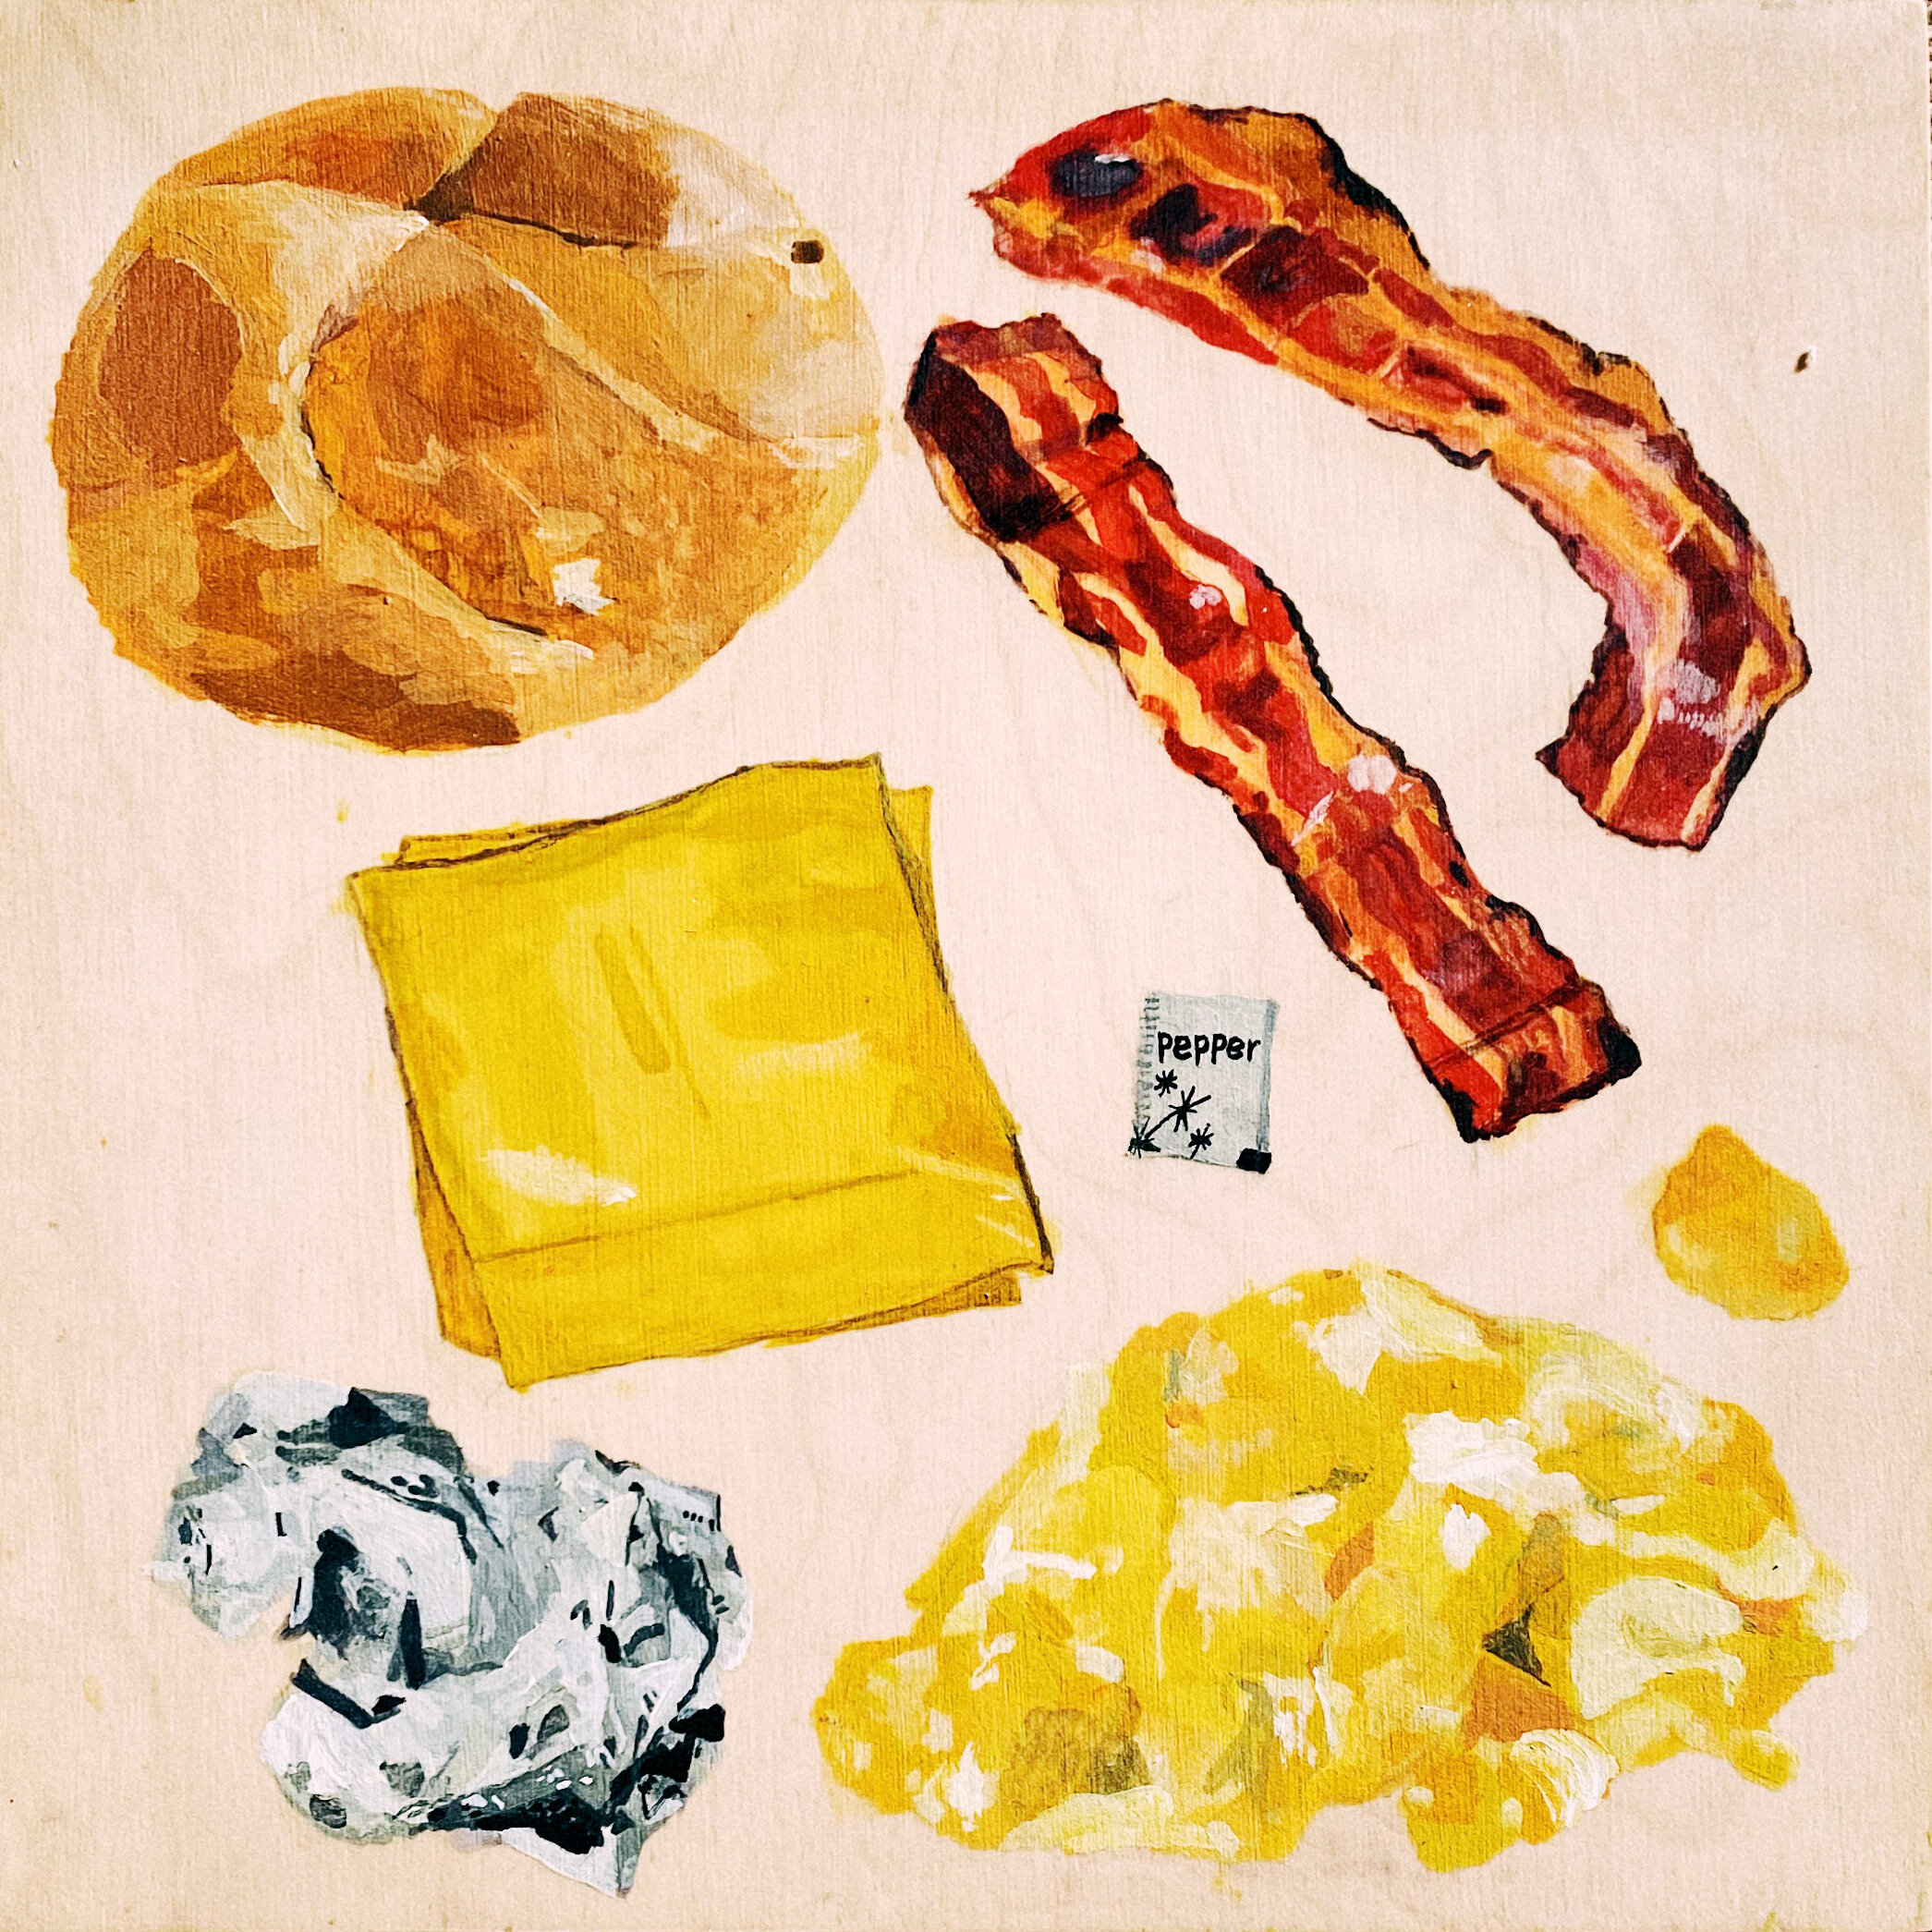  "Comfort Food" Series: Bacon Egg & Cheese | Acrylic on Wood | 8”x 8”